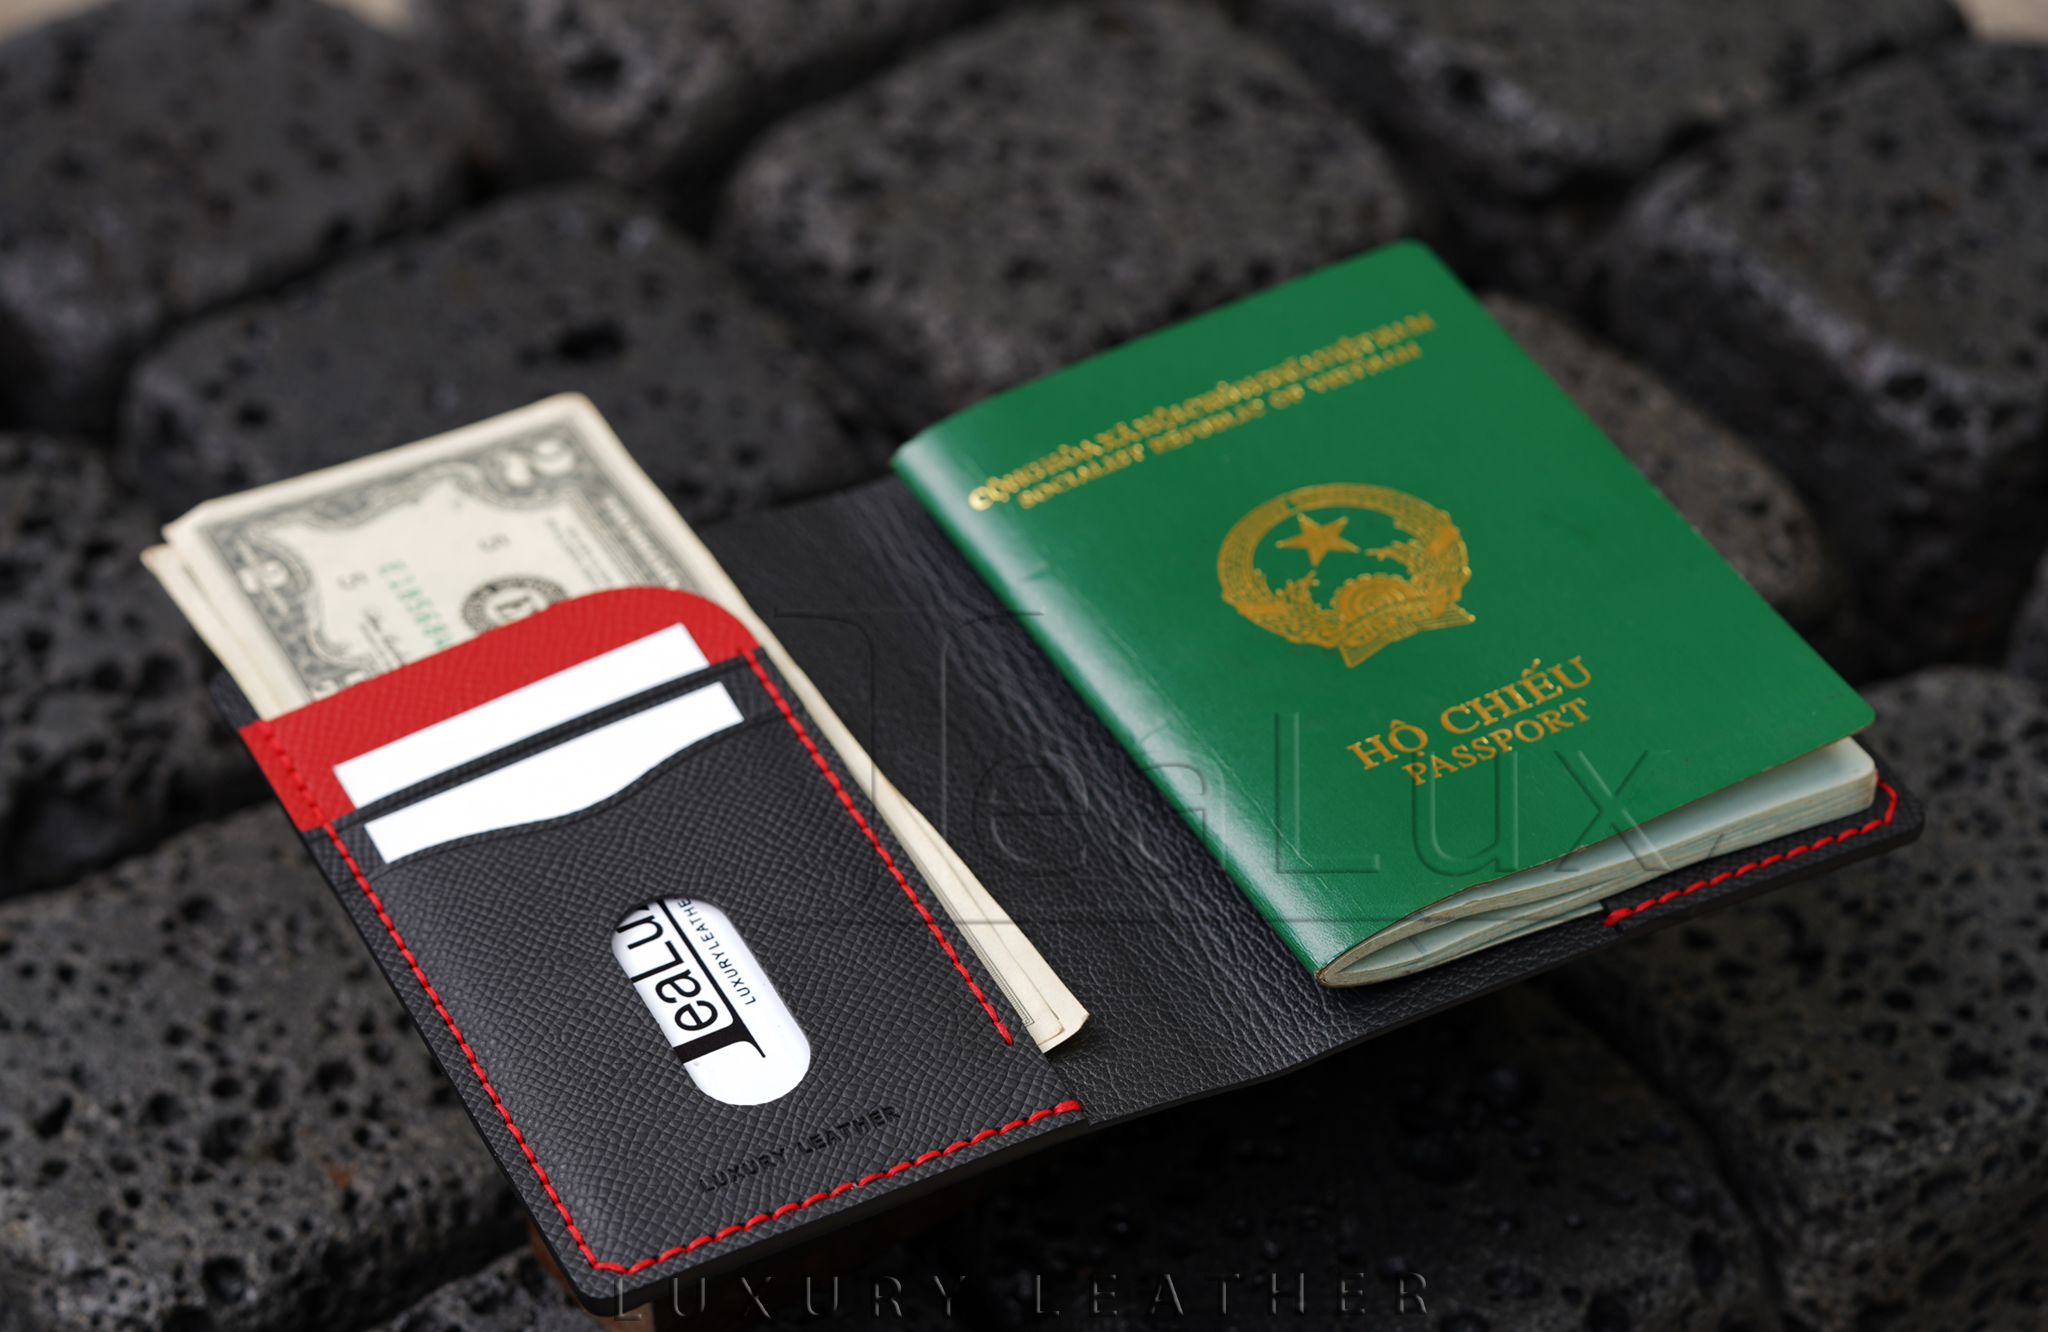 Ví Đựng Hộ Chiếu Da Epsom Handmade Lealux Passport Wallet